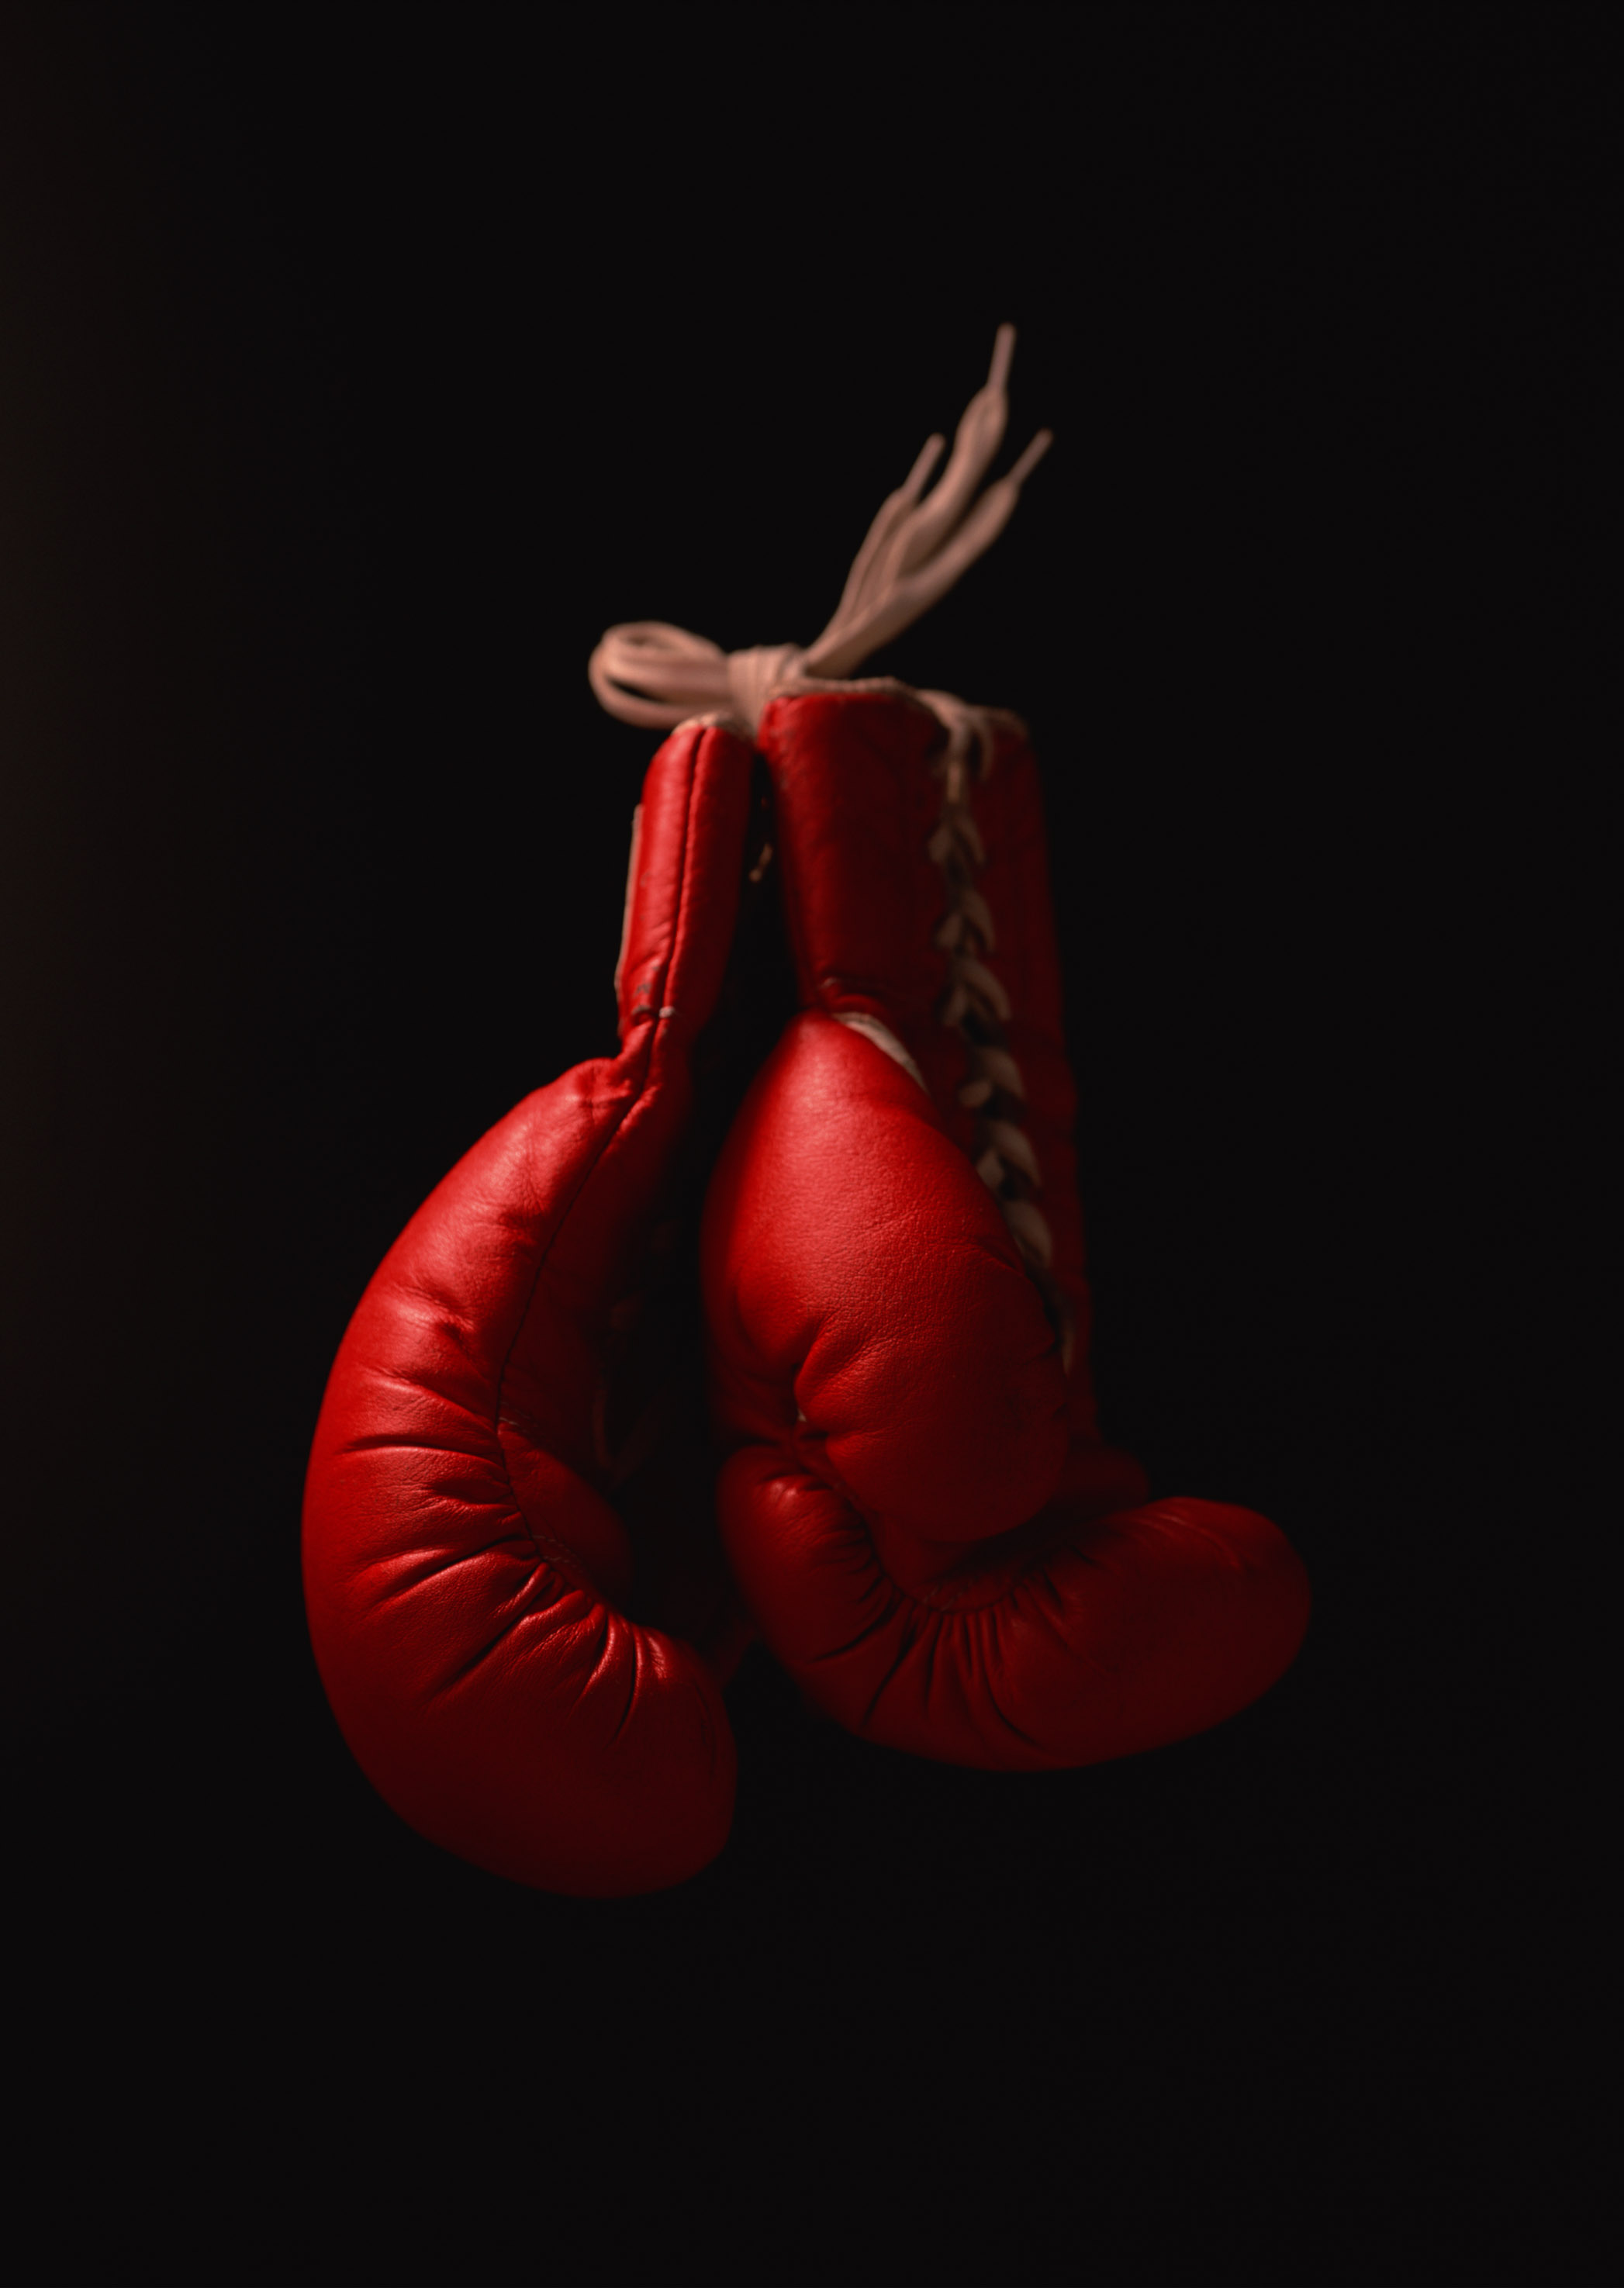 76+] Boxing Gloves Wallpaper - WallpaperSafari